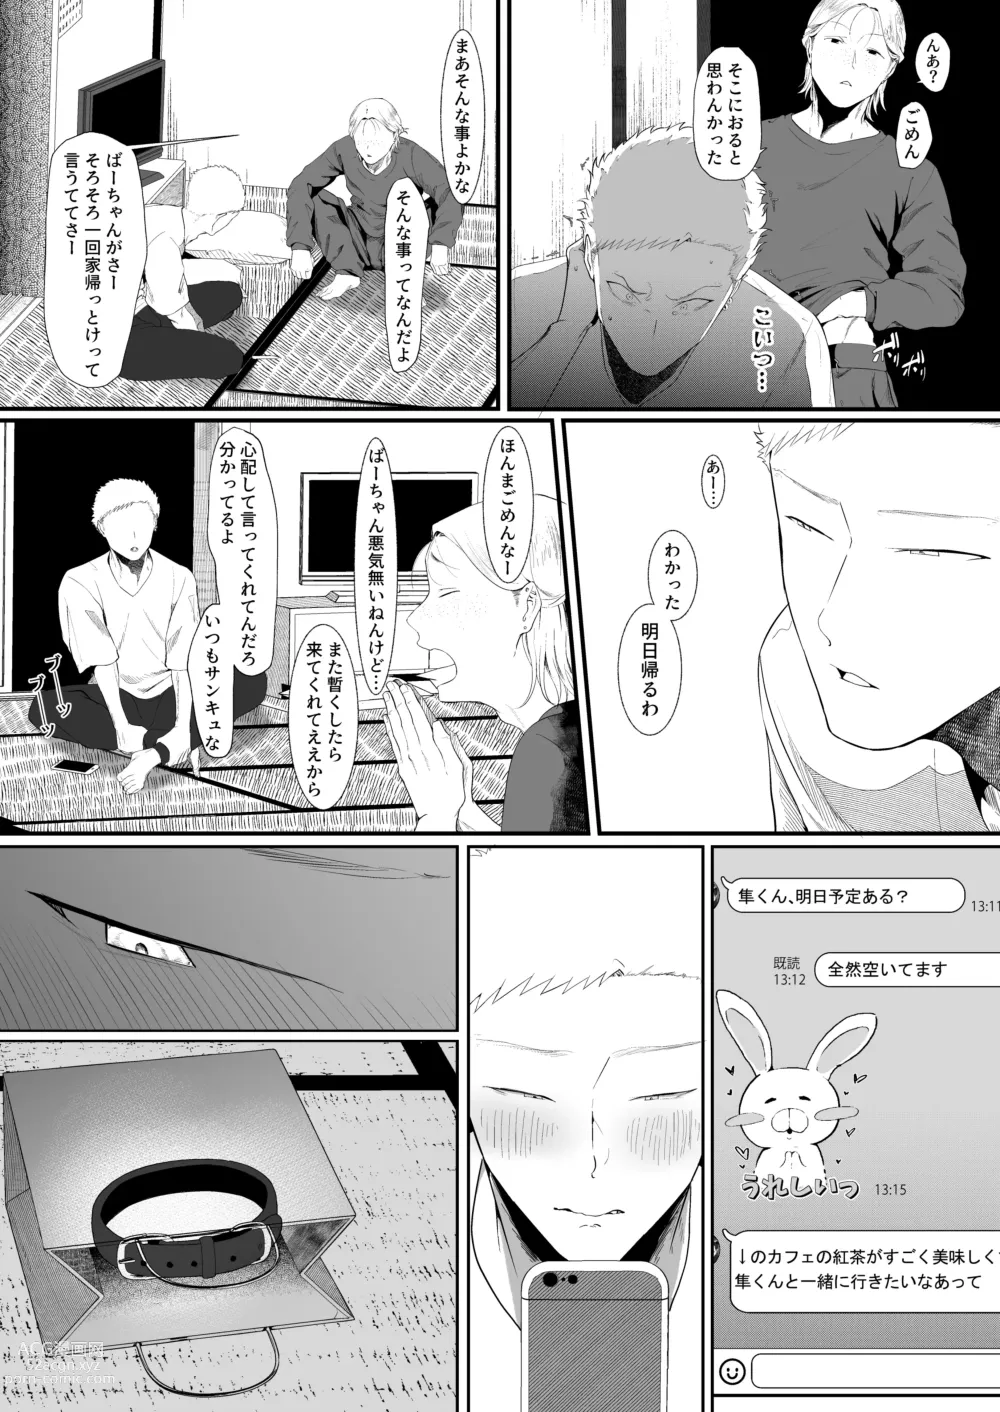 Page 41 of doujinshi UPLOAD